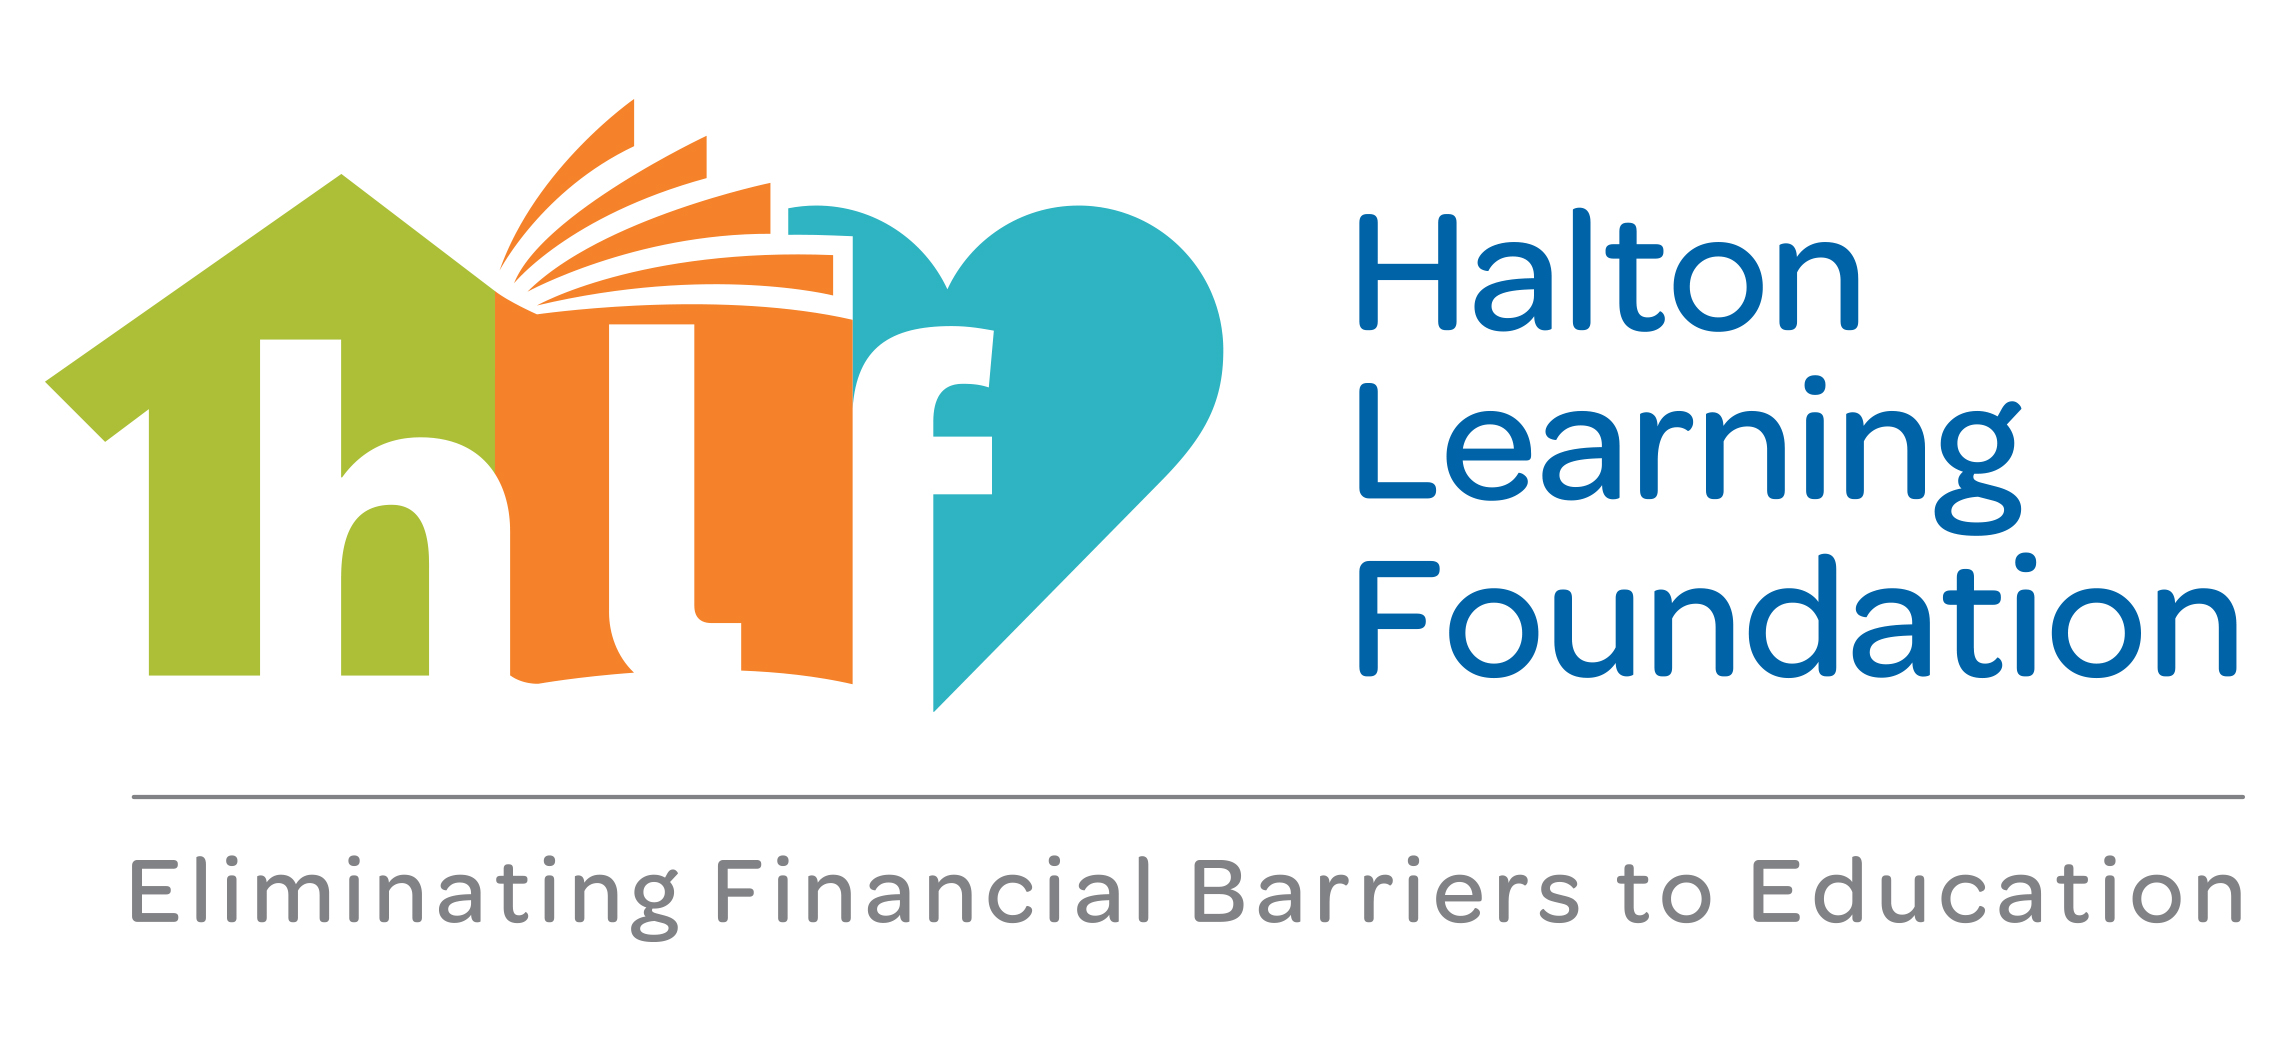 halton learnign foundation logo